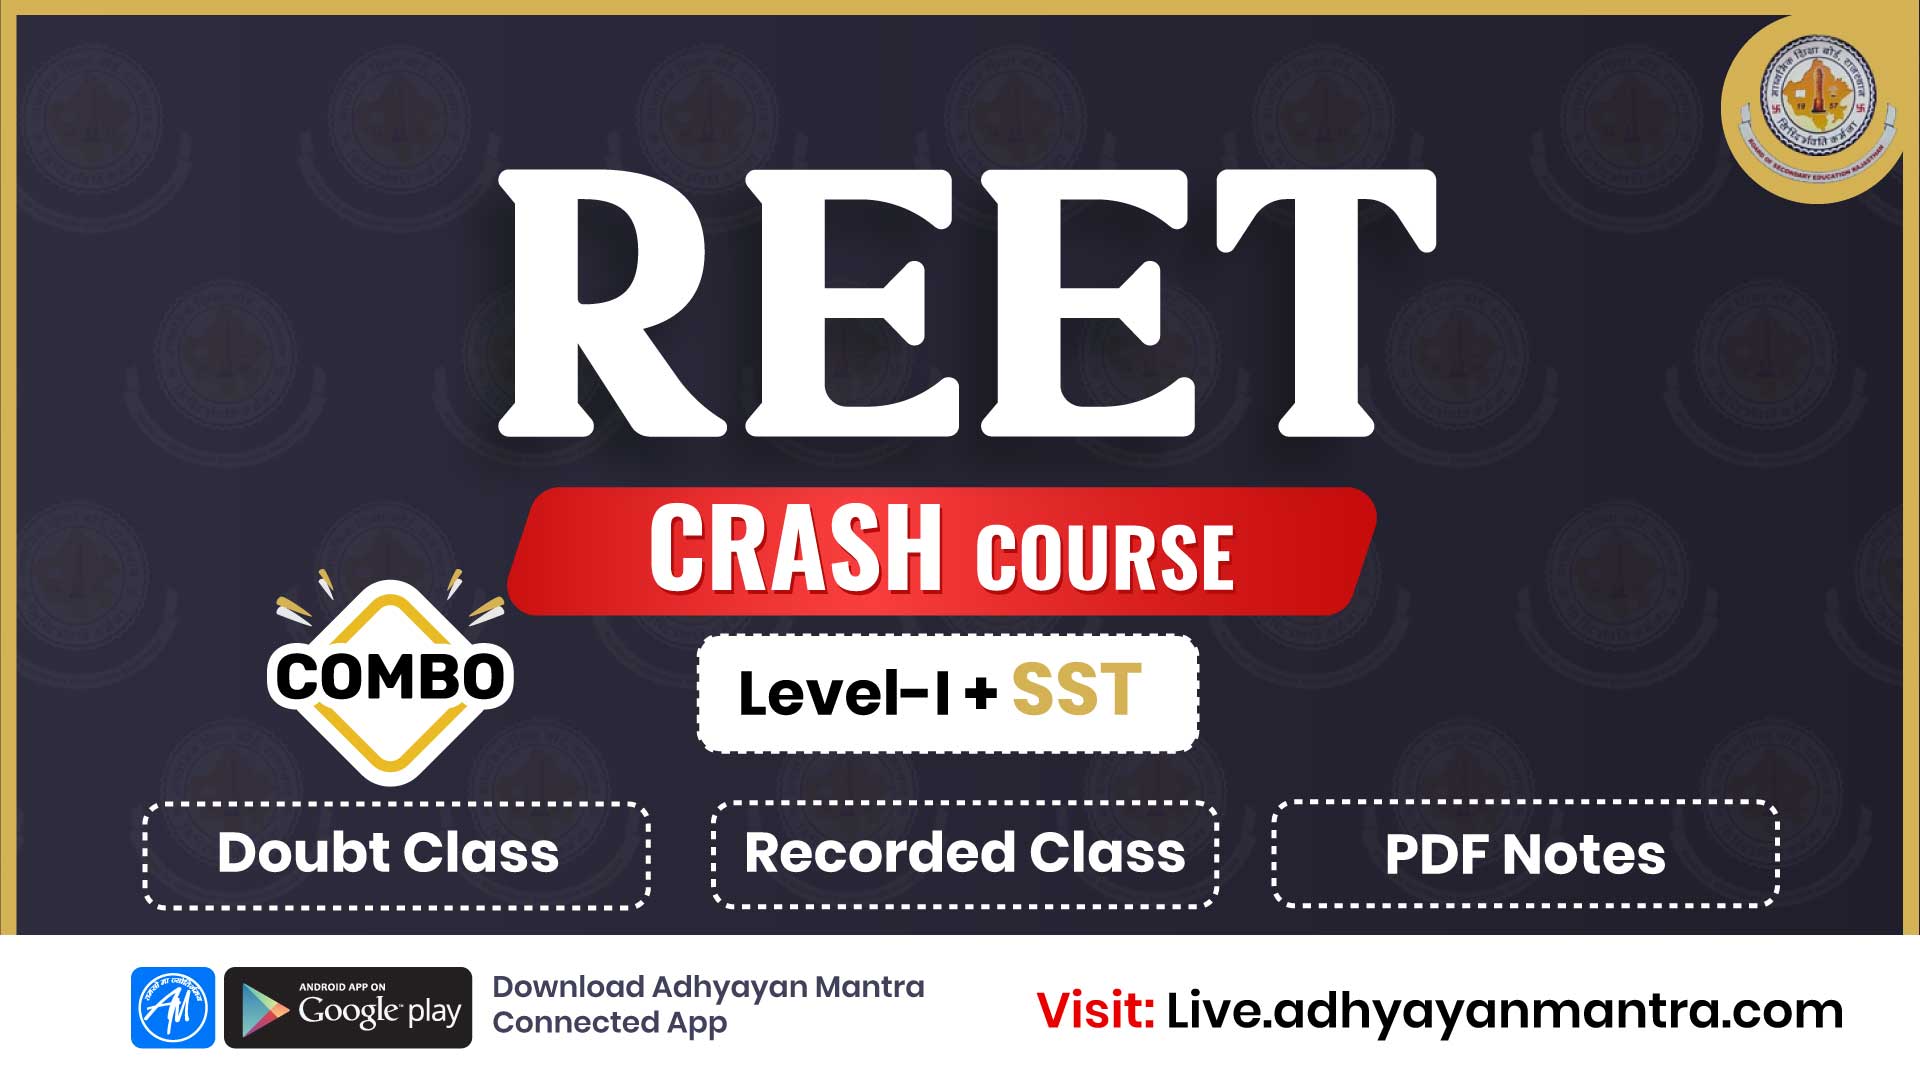 reet_crash_course_level1+sst.jpg